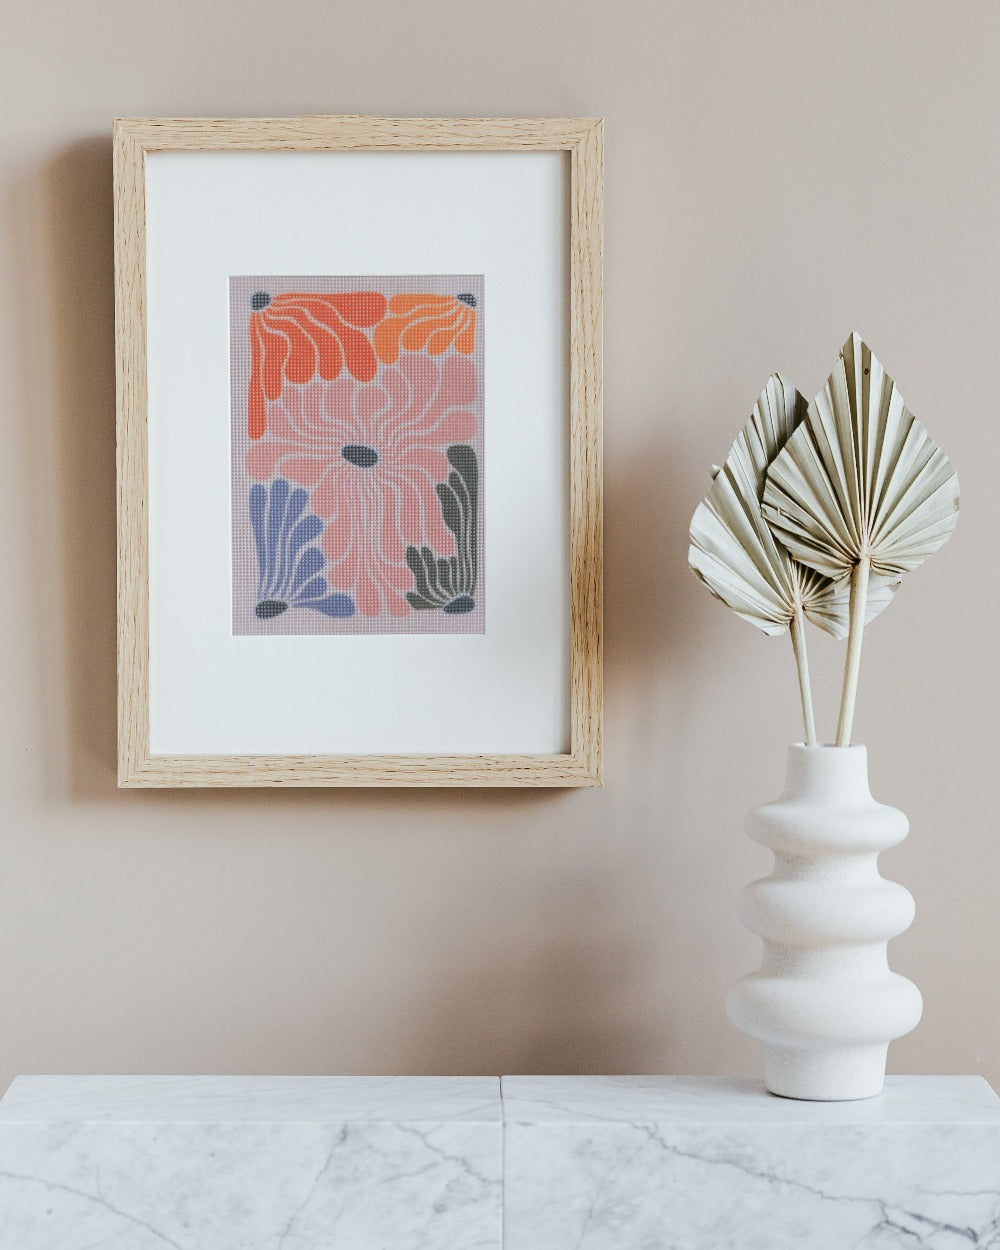 Basaloreak floral modern design needlepoint kit canvas home decor 